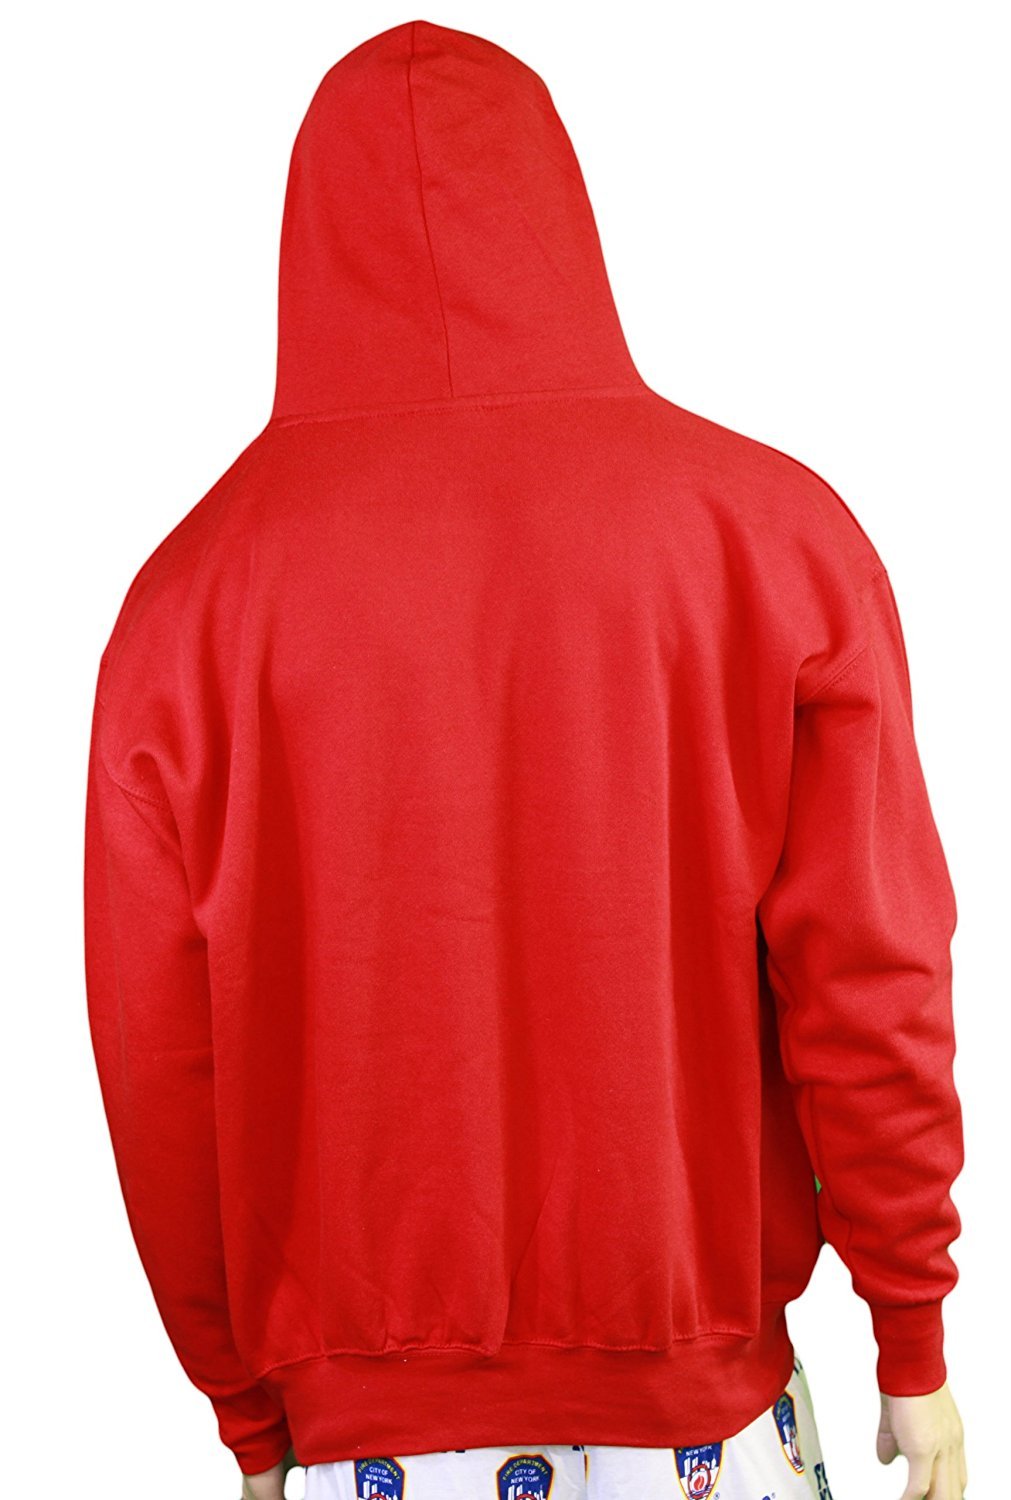 FDNY Men's Hoodie Sweatshirt Officially Licensed (Red)